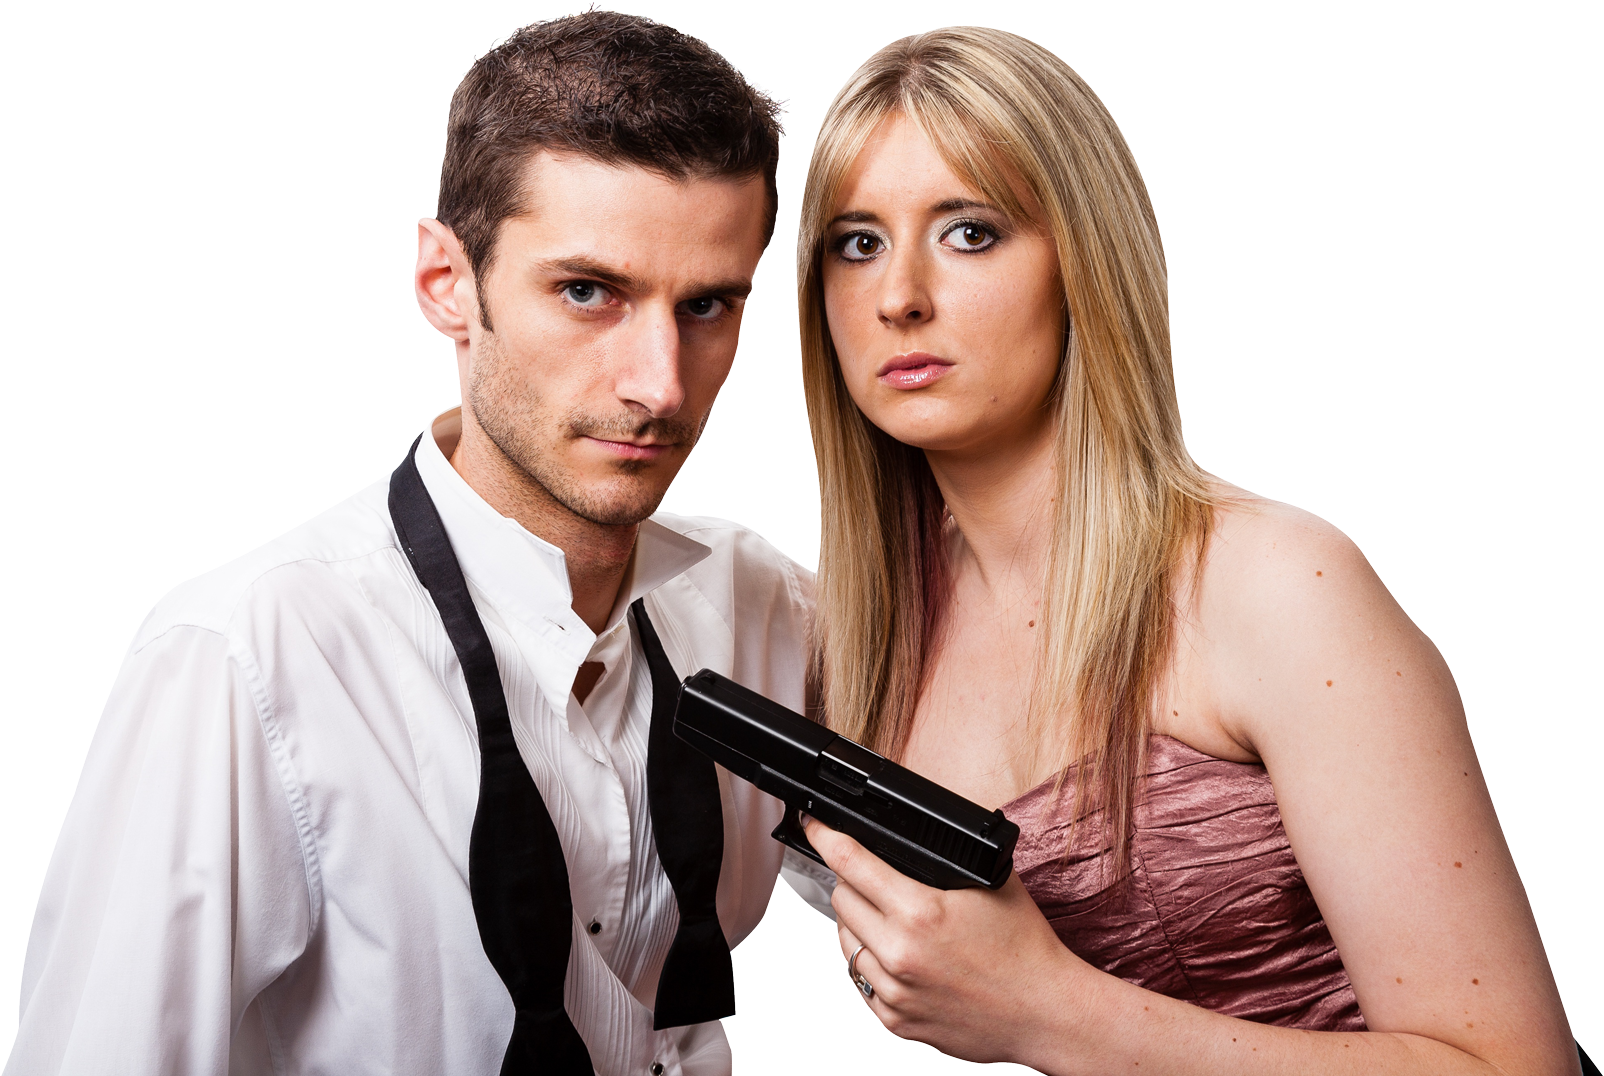 A Man And Woman Holding A Gun